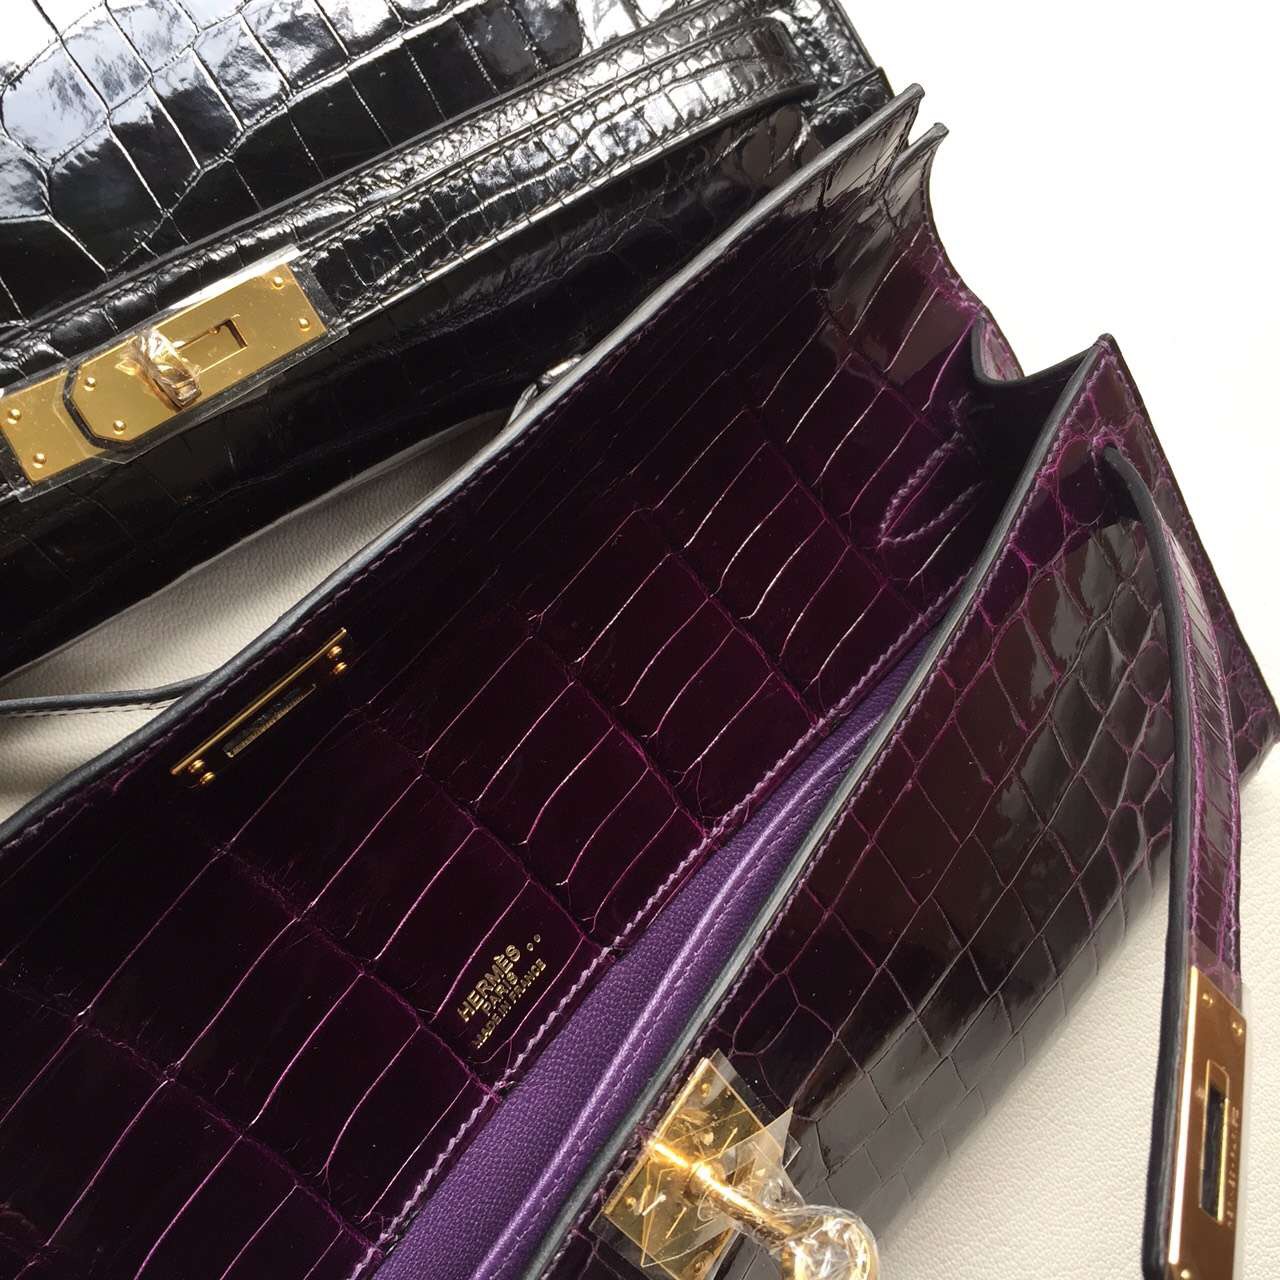 Hermes 9G Violet Crocodile Shiny Leather Kelly Cut Clutch Bag31cm